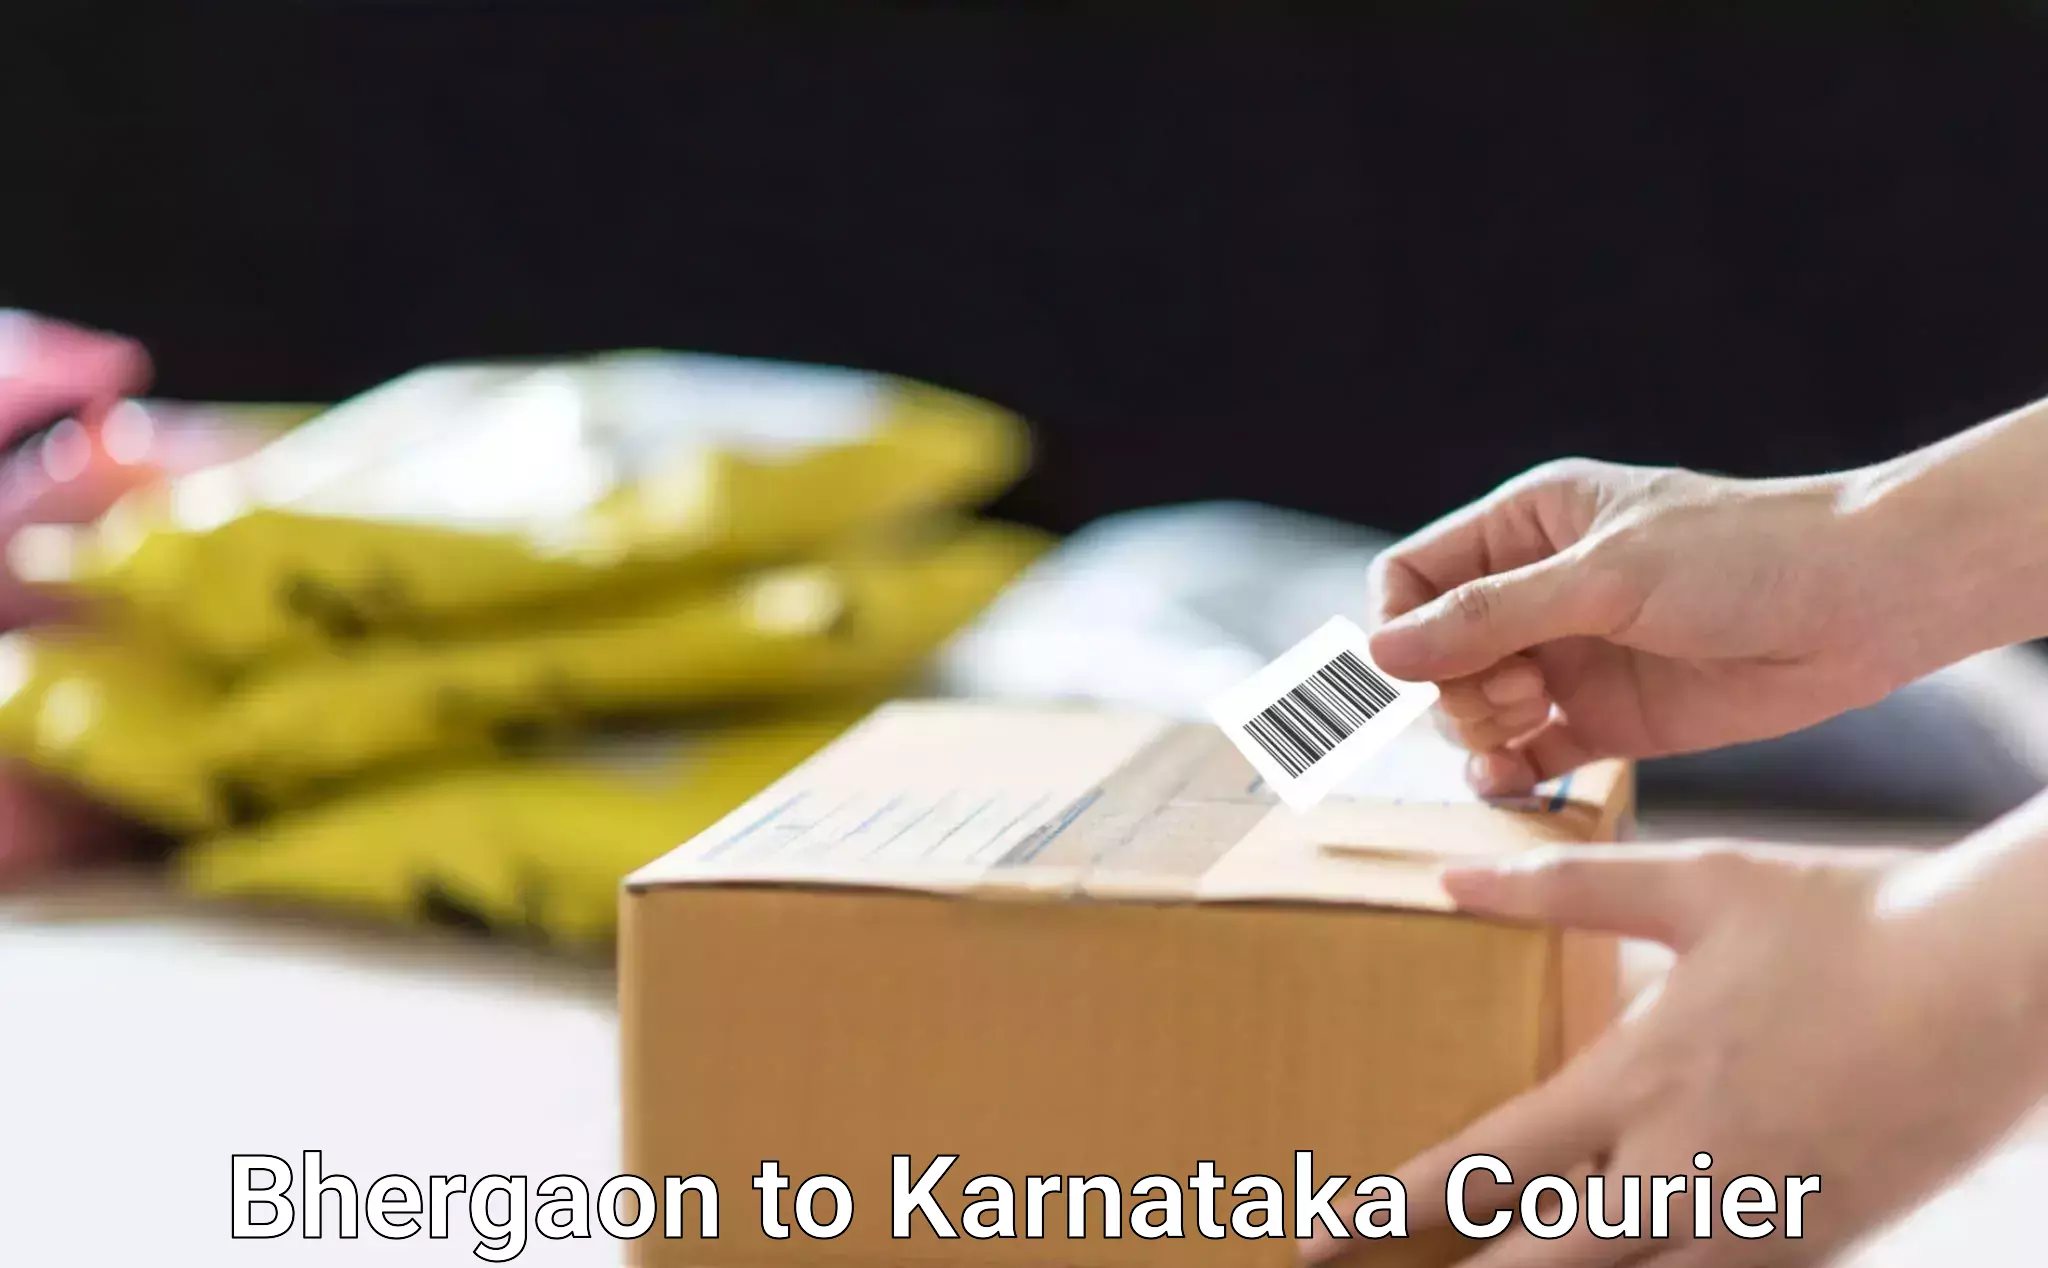 User-friendly delivery service Bhergaon to Karnataka